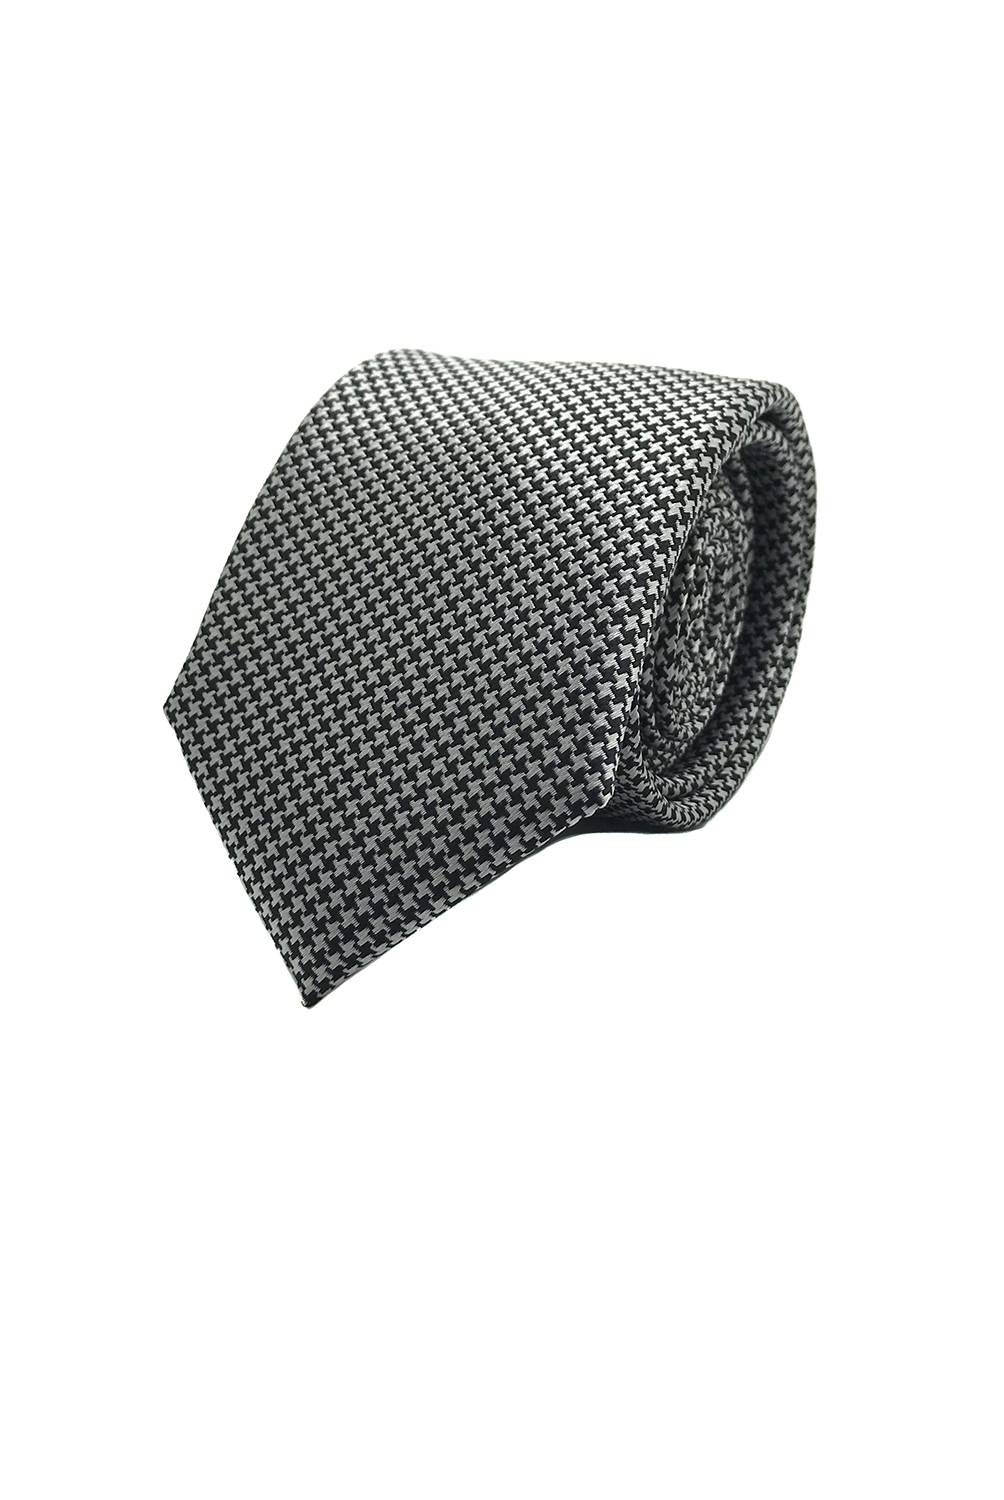 BASEMENT - Corbata Negra Cuadro Blanco Microfibra 7 Cm